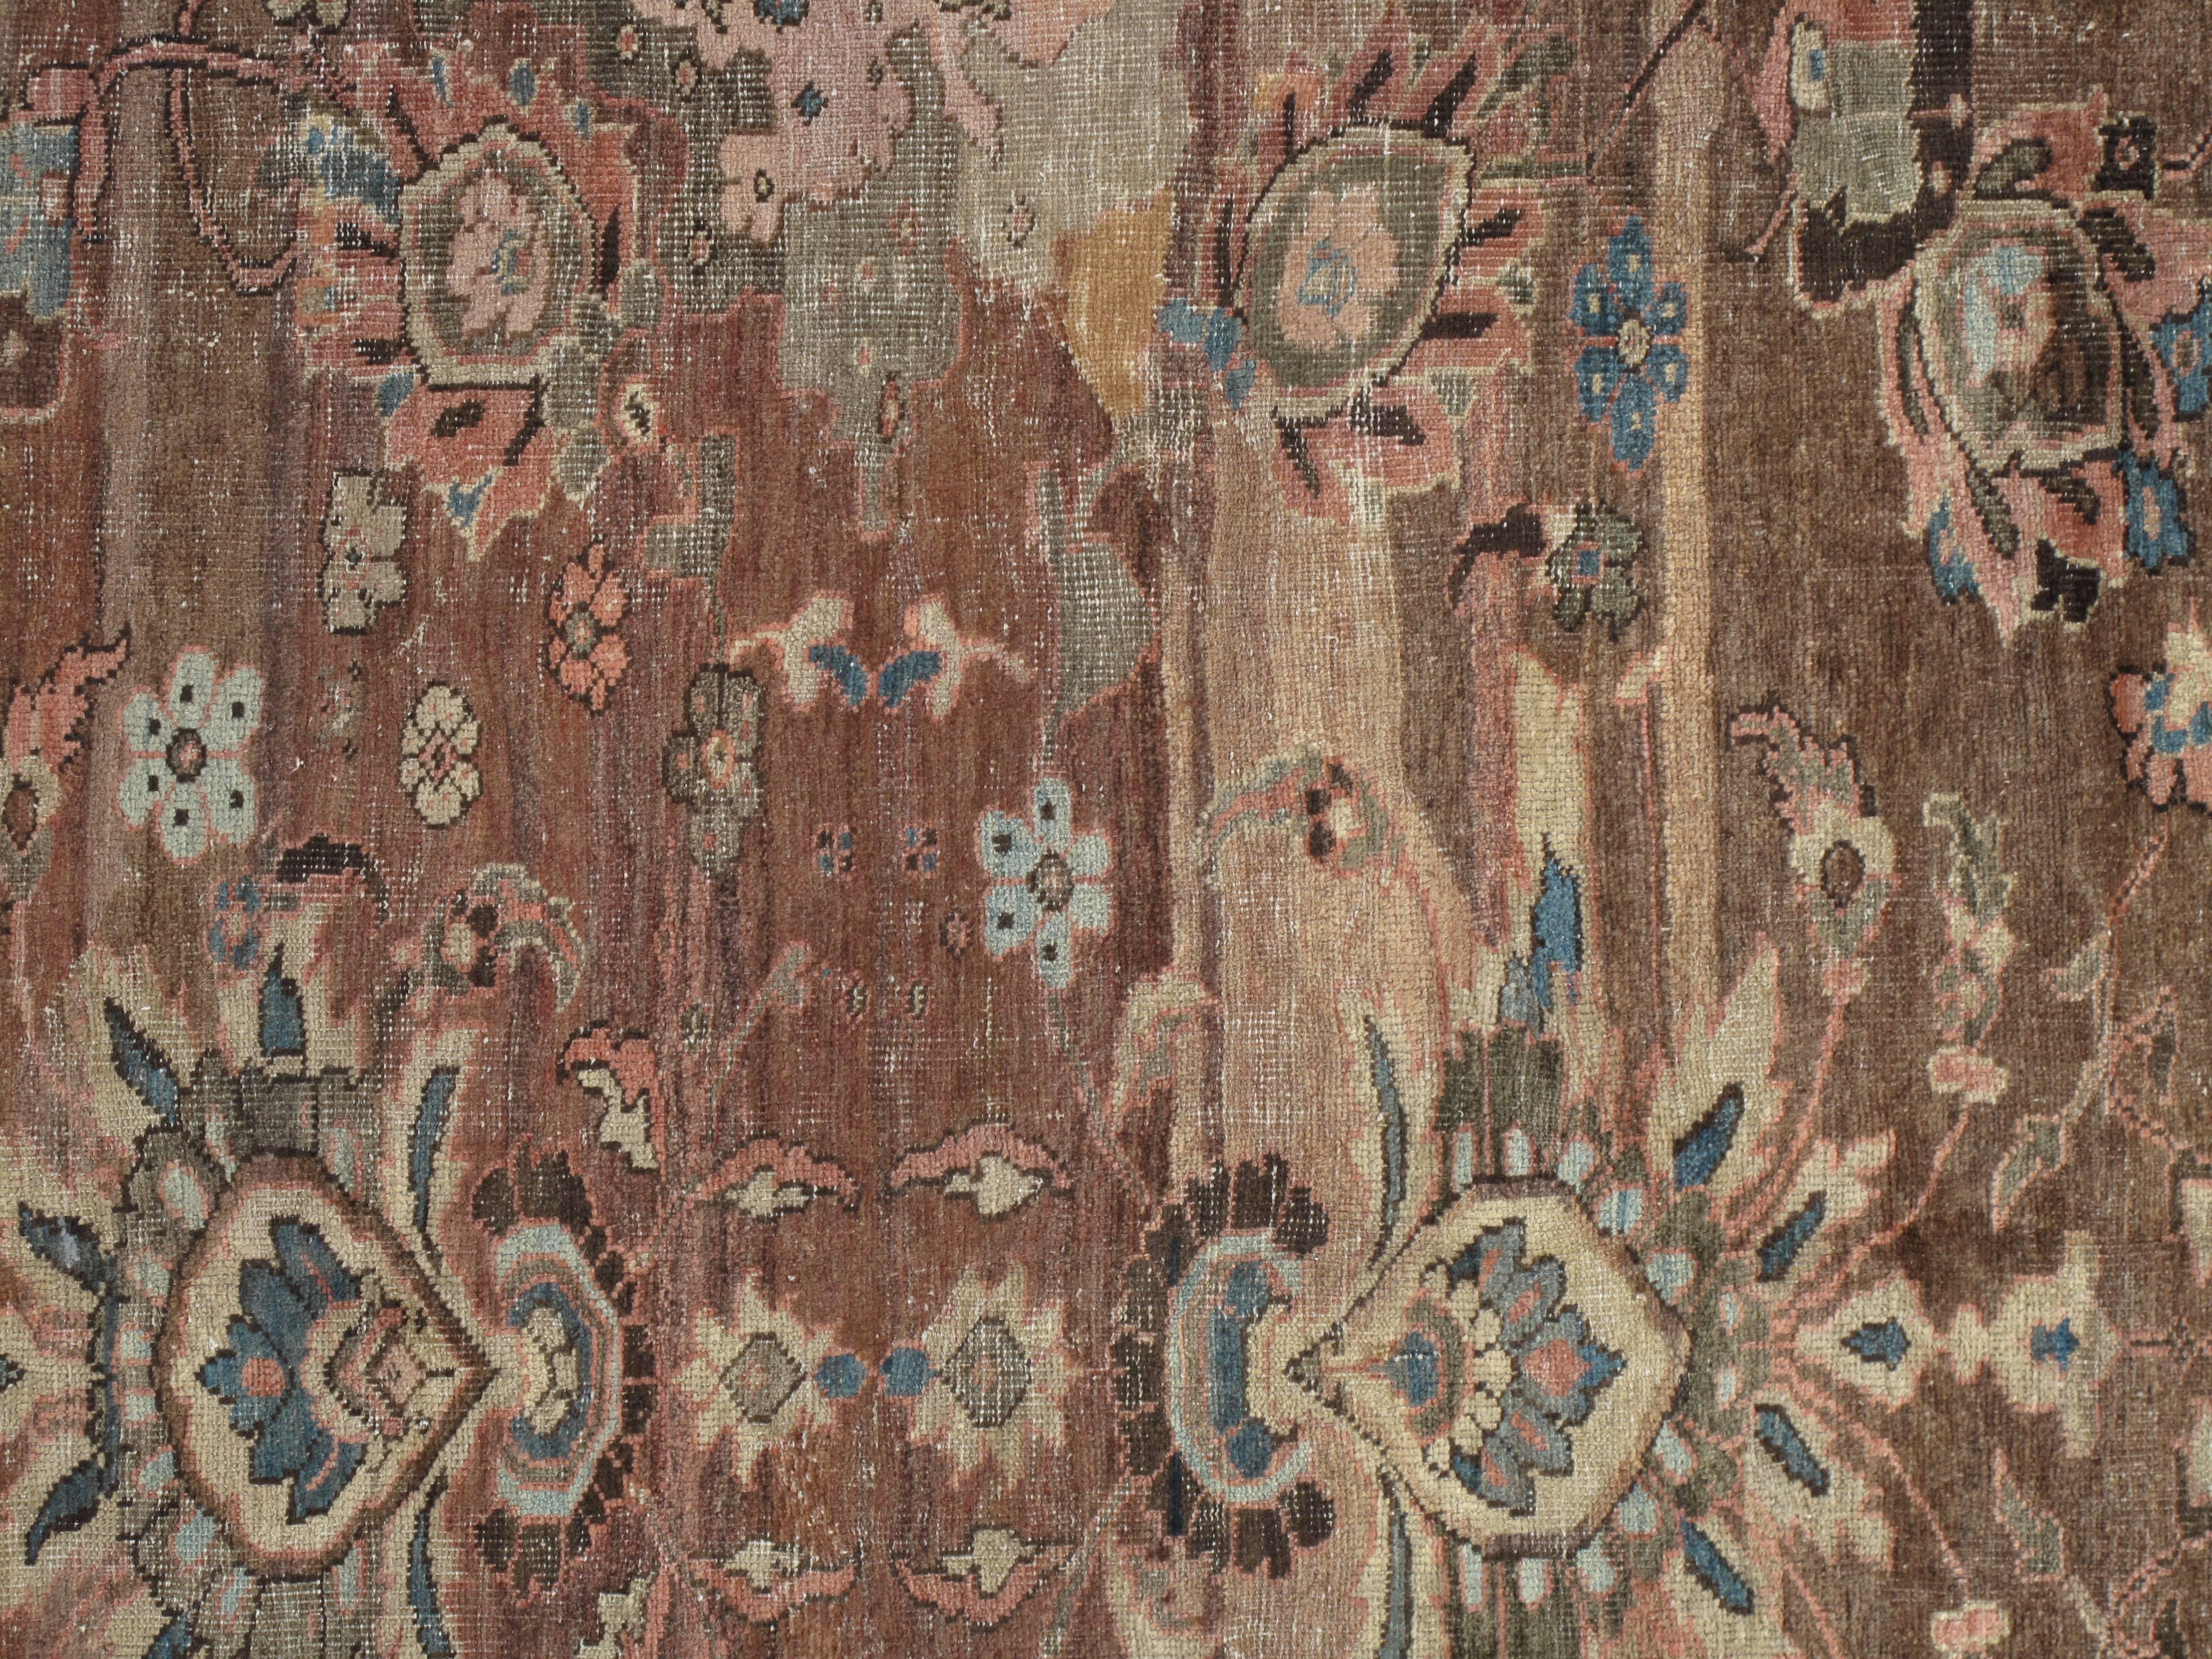 19th Century Antique Persian Sultanabad Carpet, Handmade Oriental Rug, Light Blue, Terracotta